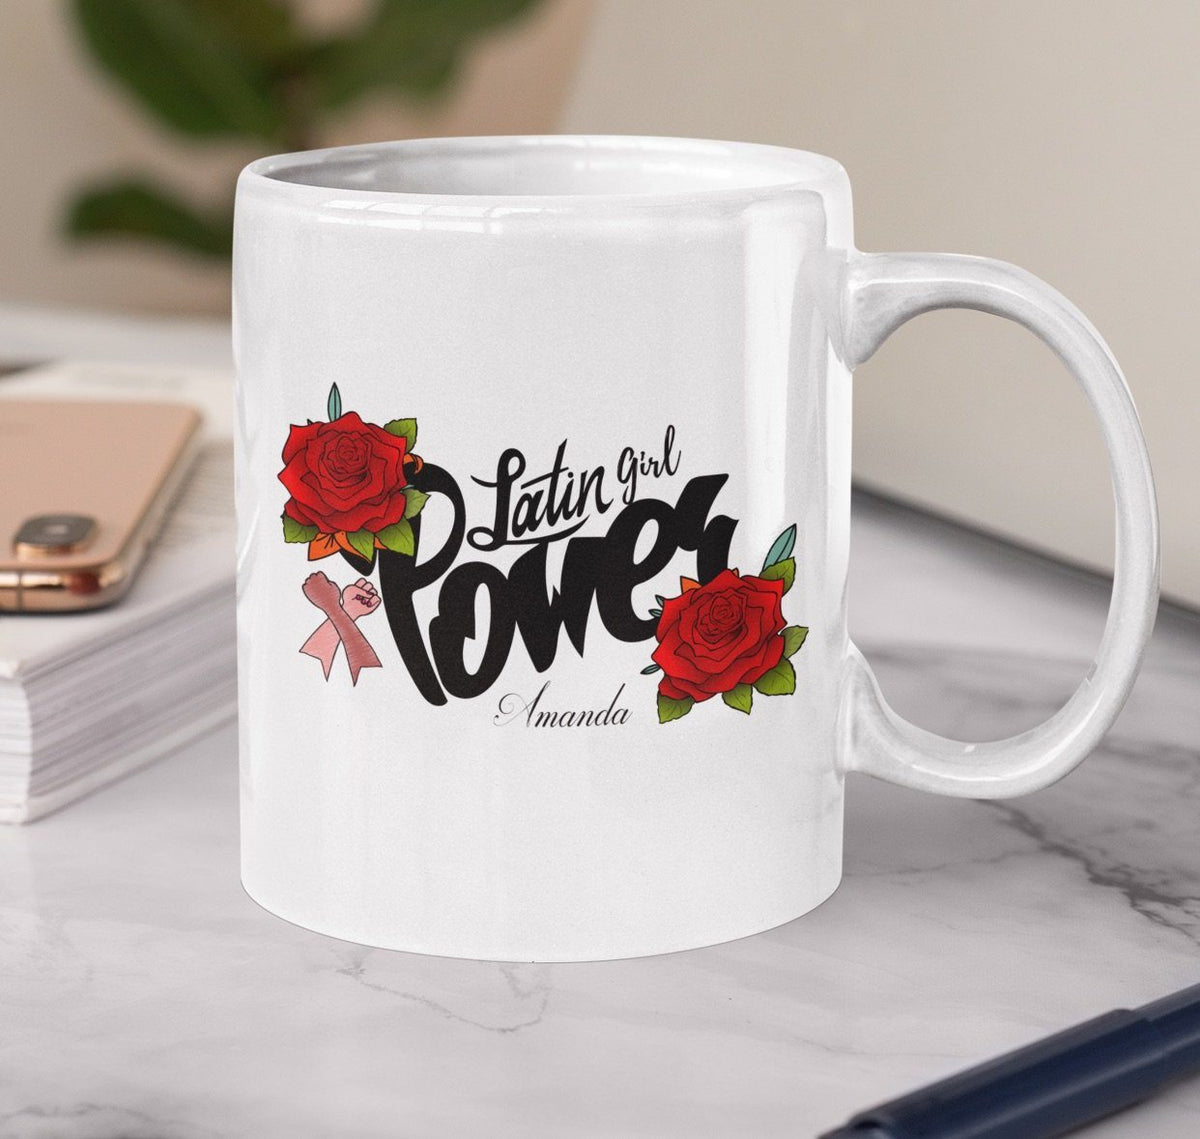 Latin Girl Power Taza Personalizada Coffee Mug Regalos.Gifts 11oz Mug White 